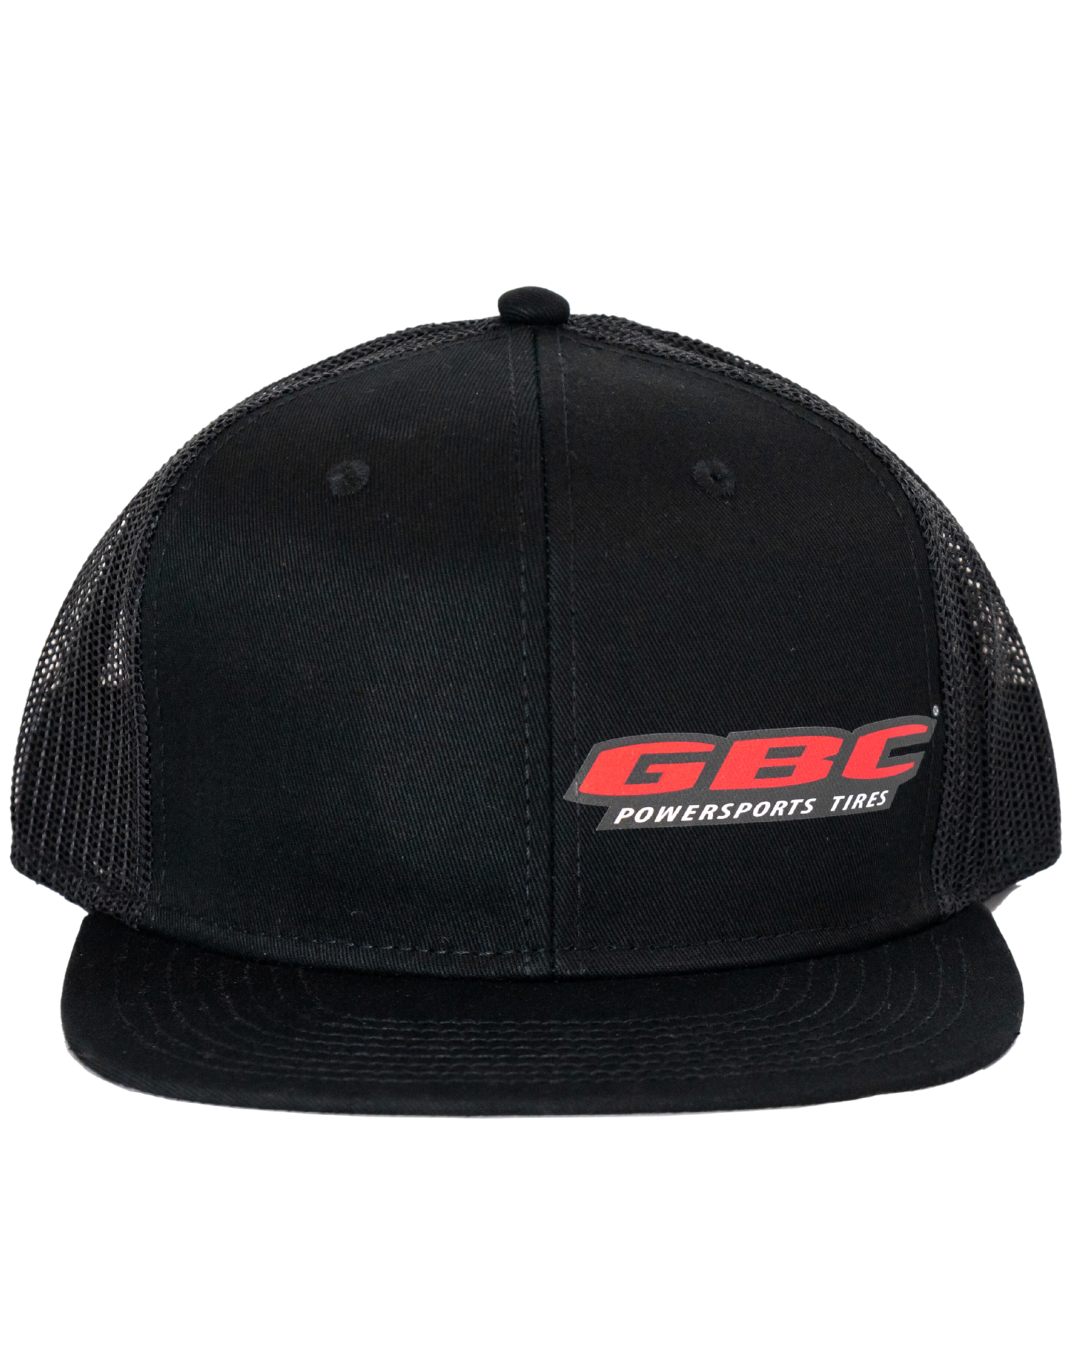 black mesh baseball cap with a small GBC logo on the bottom left.